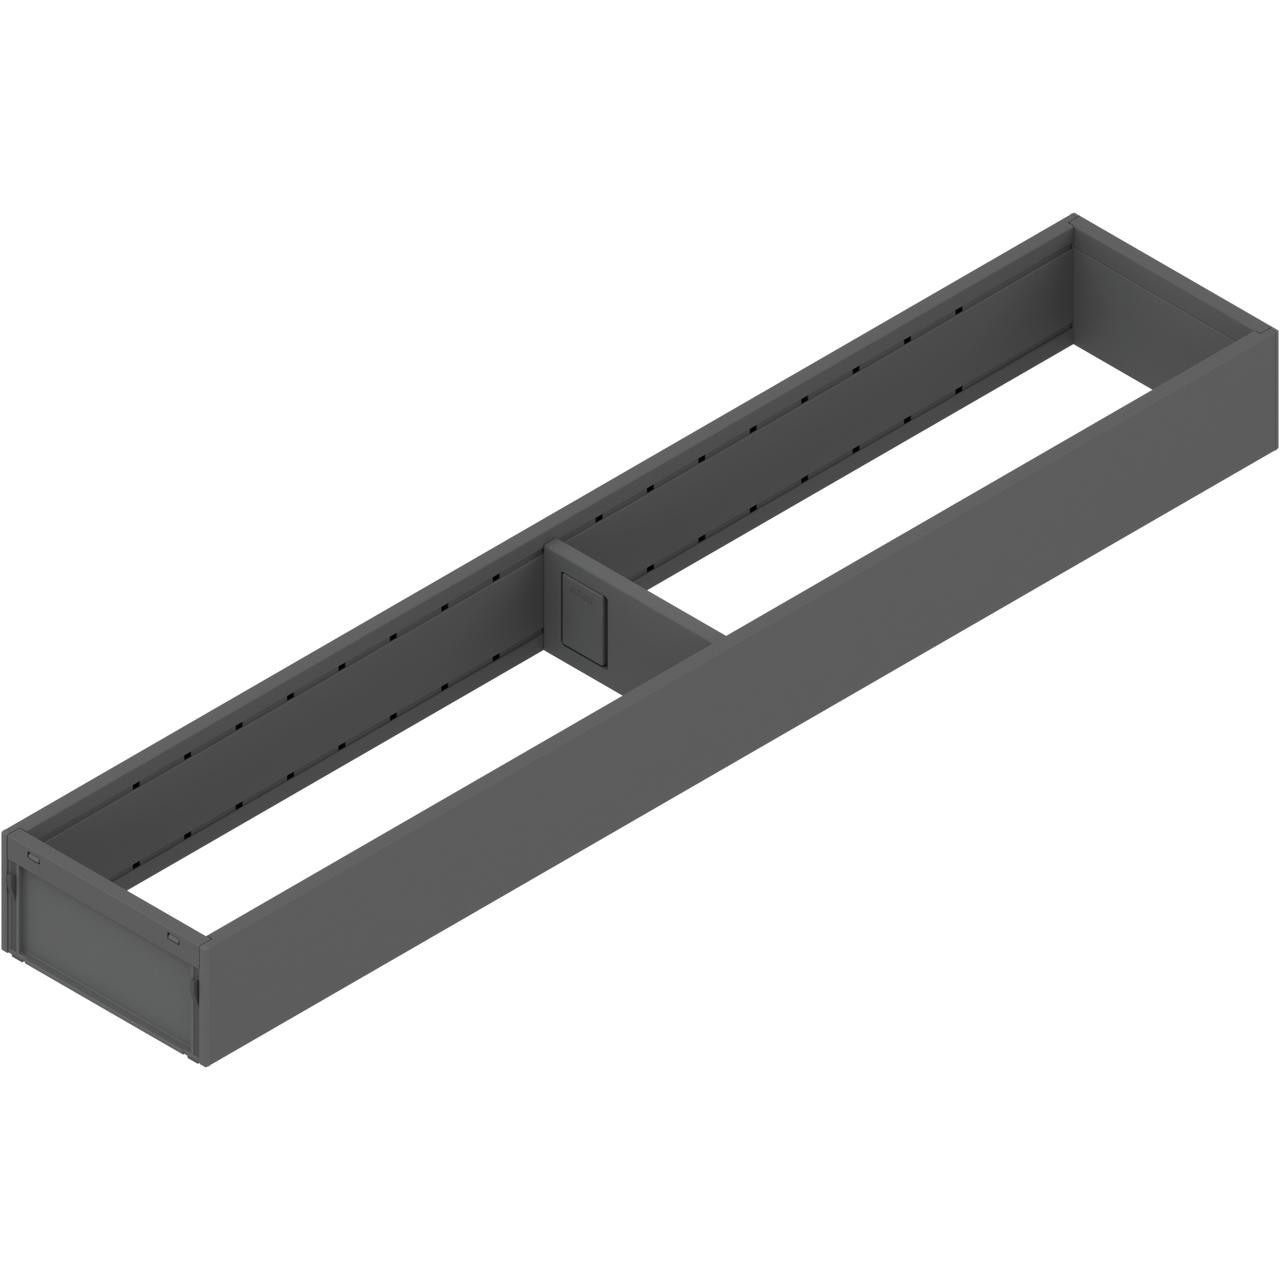  Blum ZC7S550RS1 AMBIA-LINE utensil insert (narrow) for LEGRABOX drawer, steel, NL=550 mm, width=100 mm 